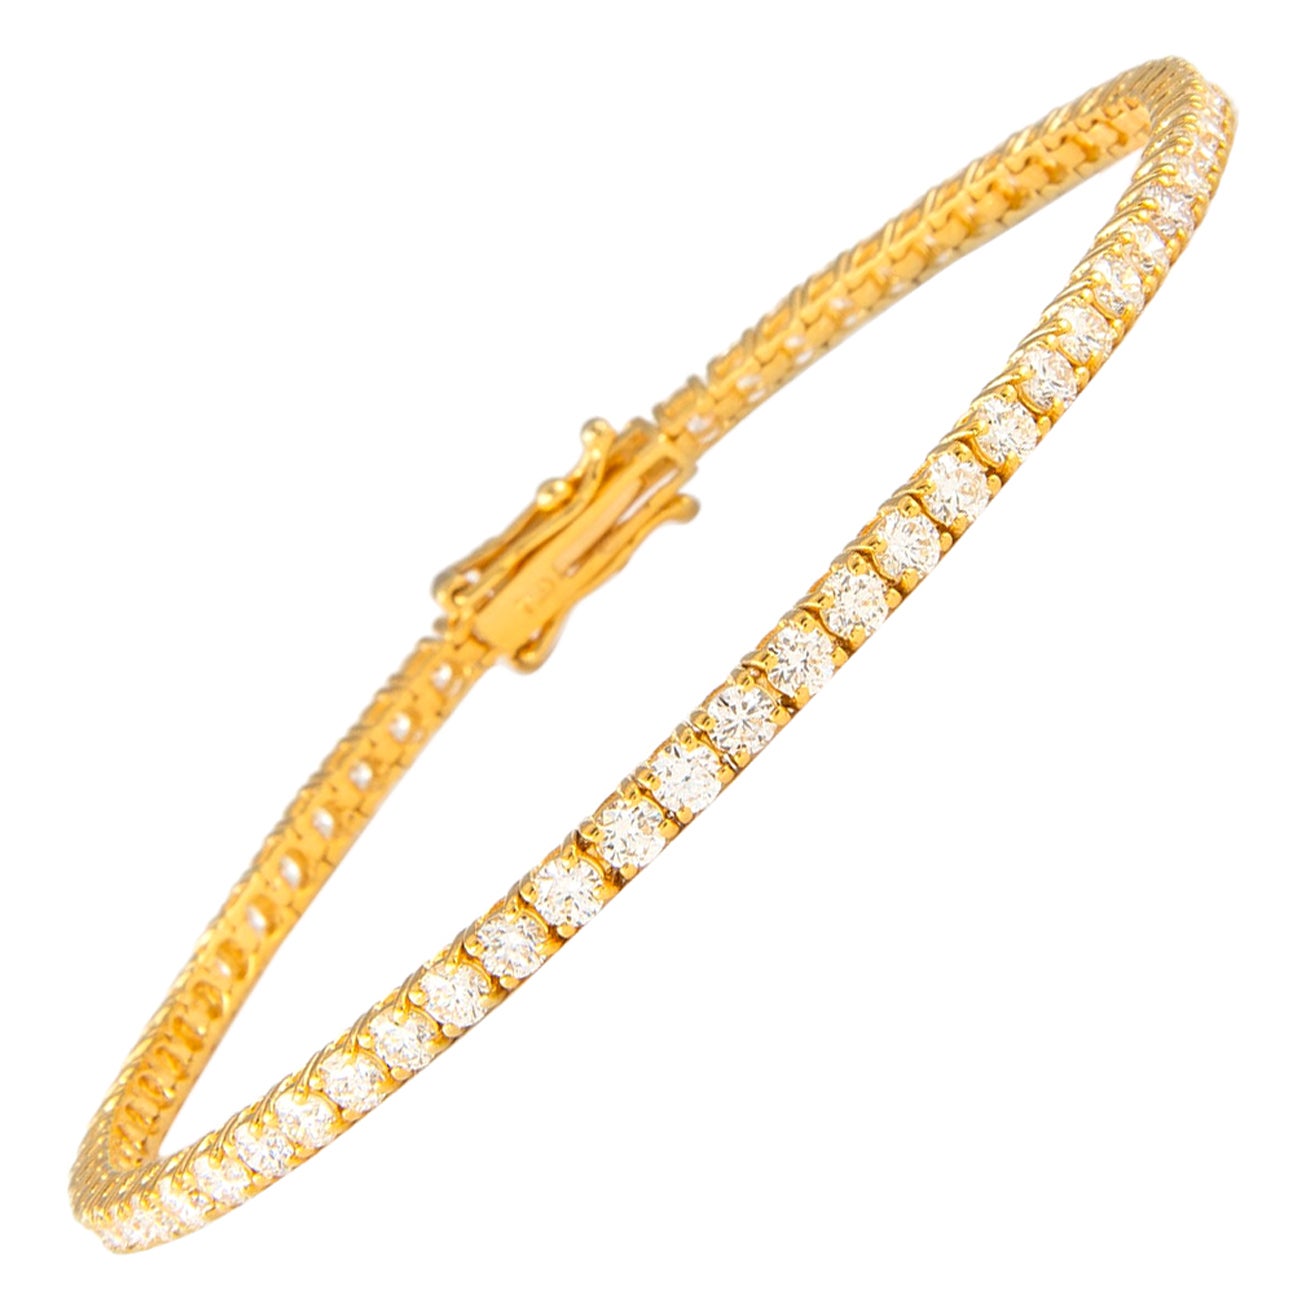 Alexander 3.73 Carats Diamond Tennis Bracelet 18 Karat Yellow Gold For Sale